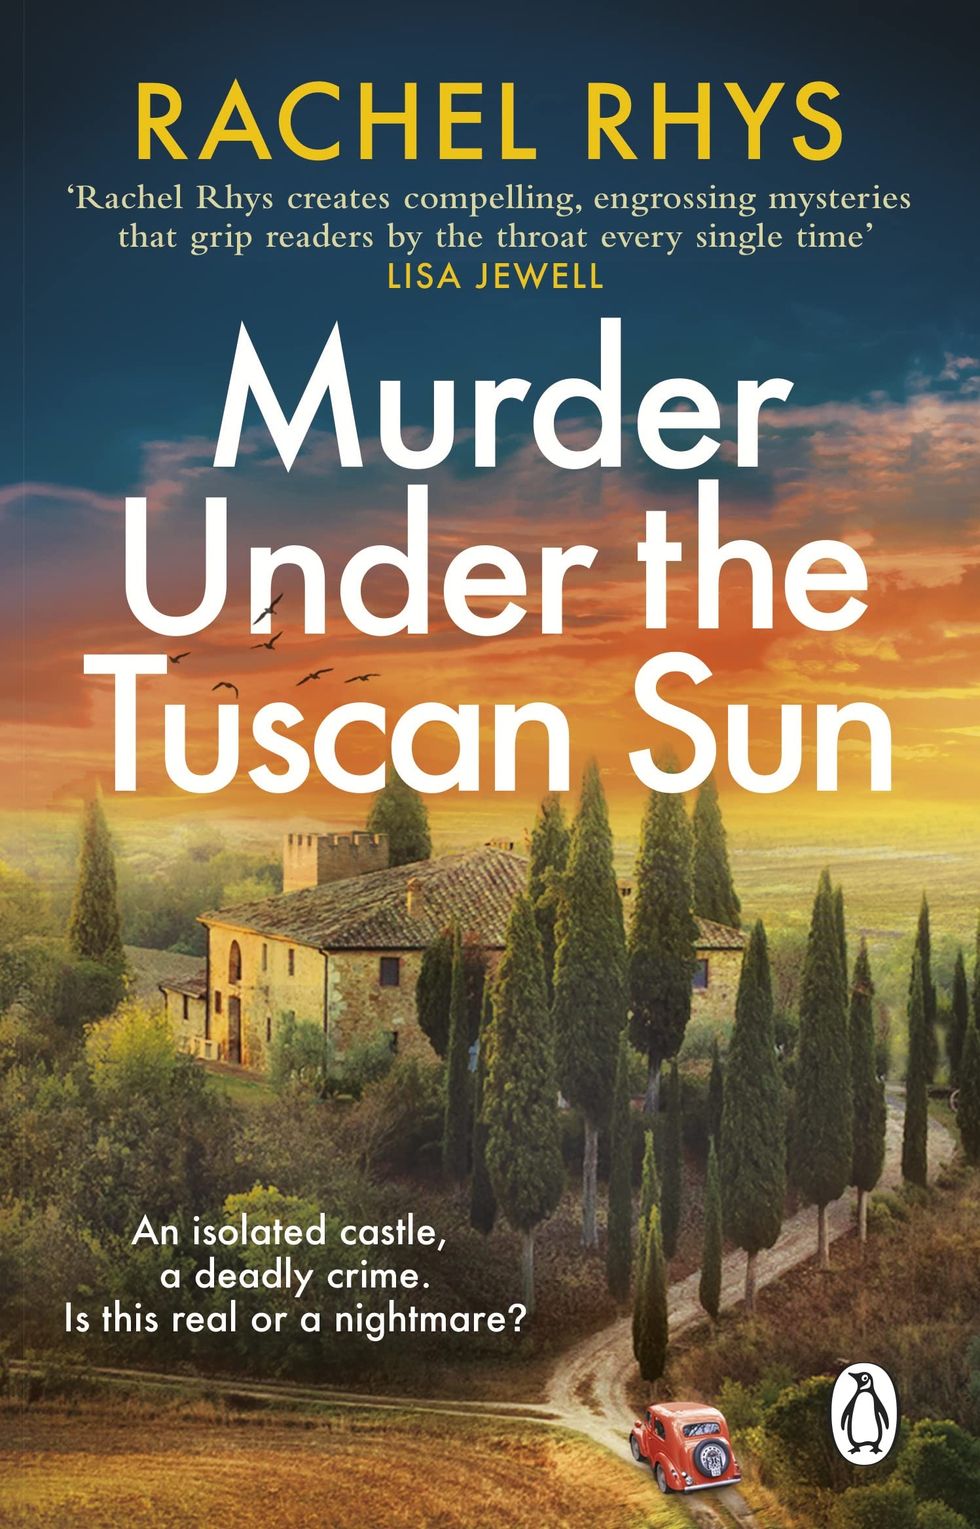 Murder Under the Tuscan Sun by Rachel Rhys